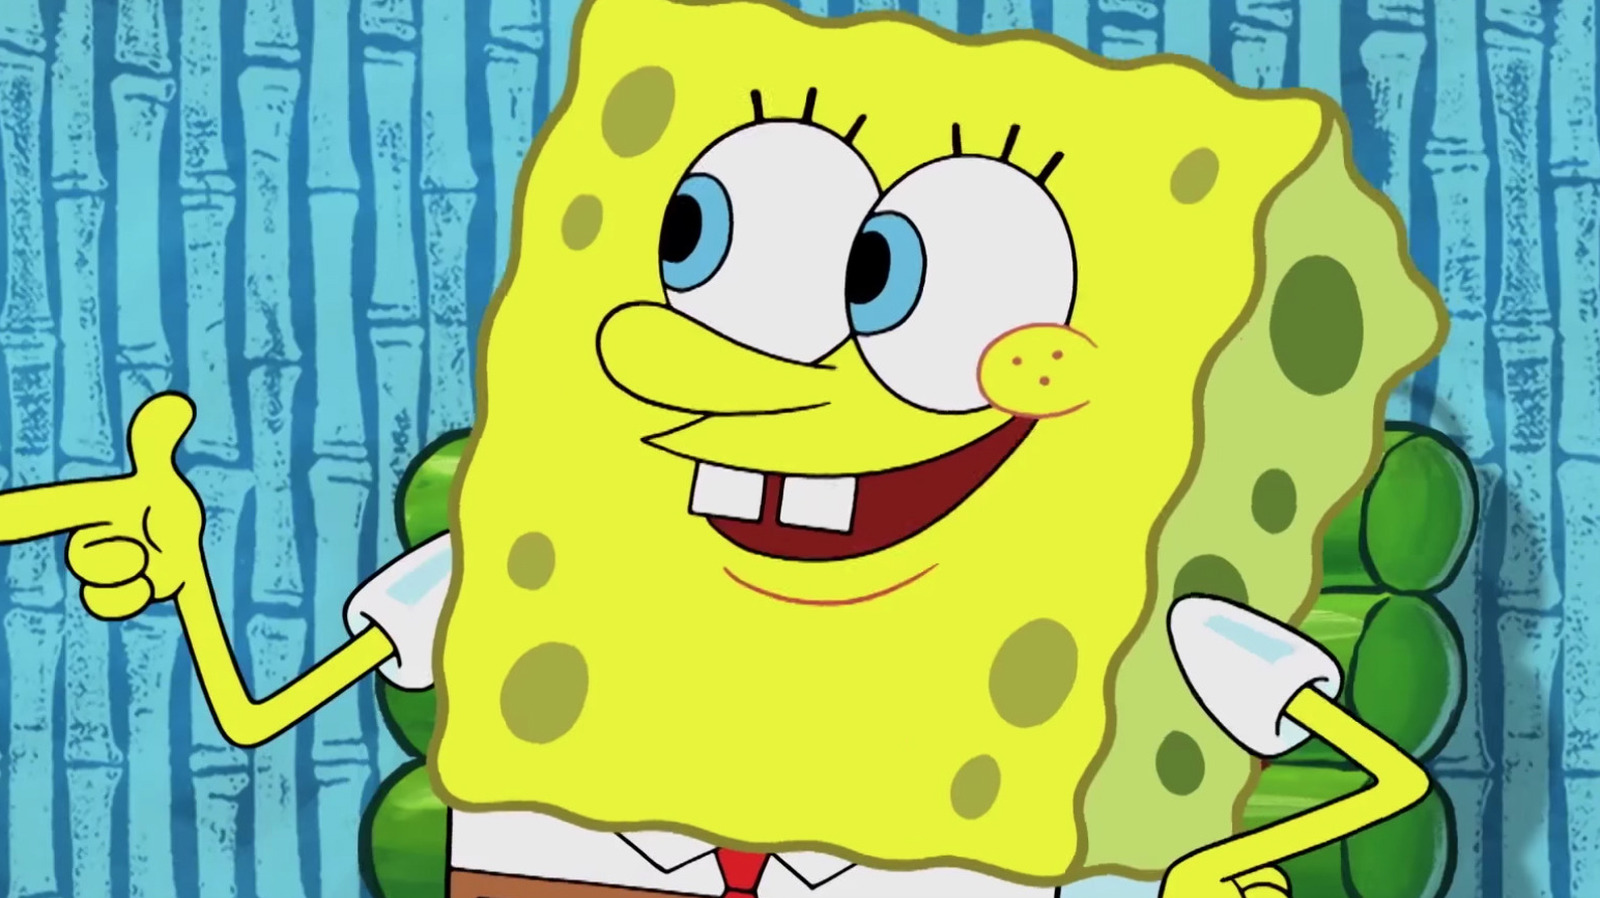 How Old Is Spongebob In Spongebob Squarepants?